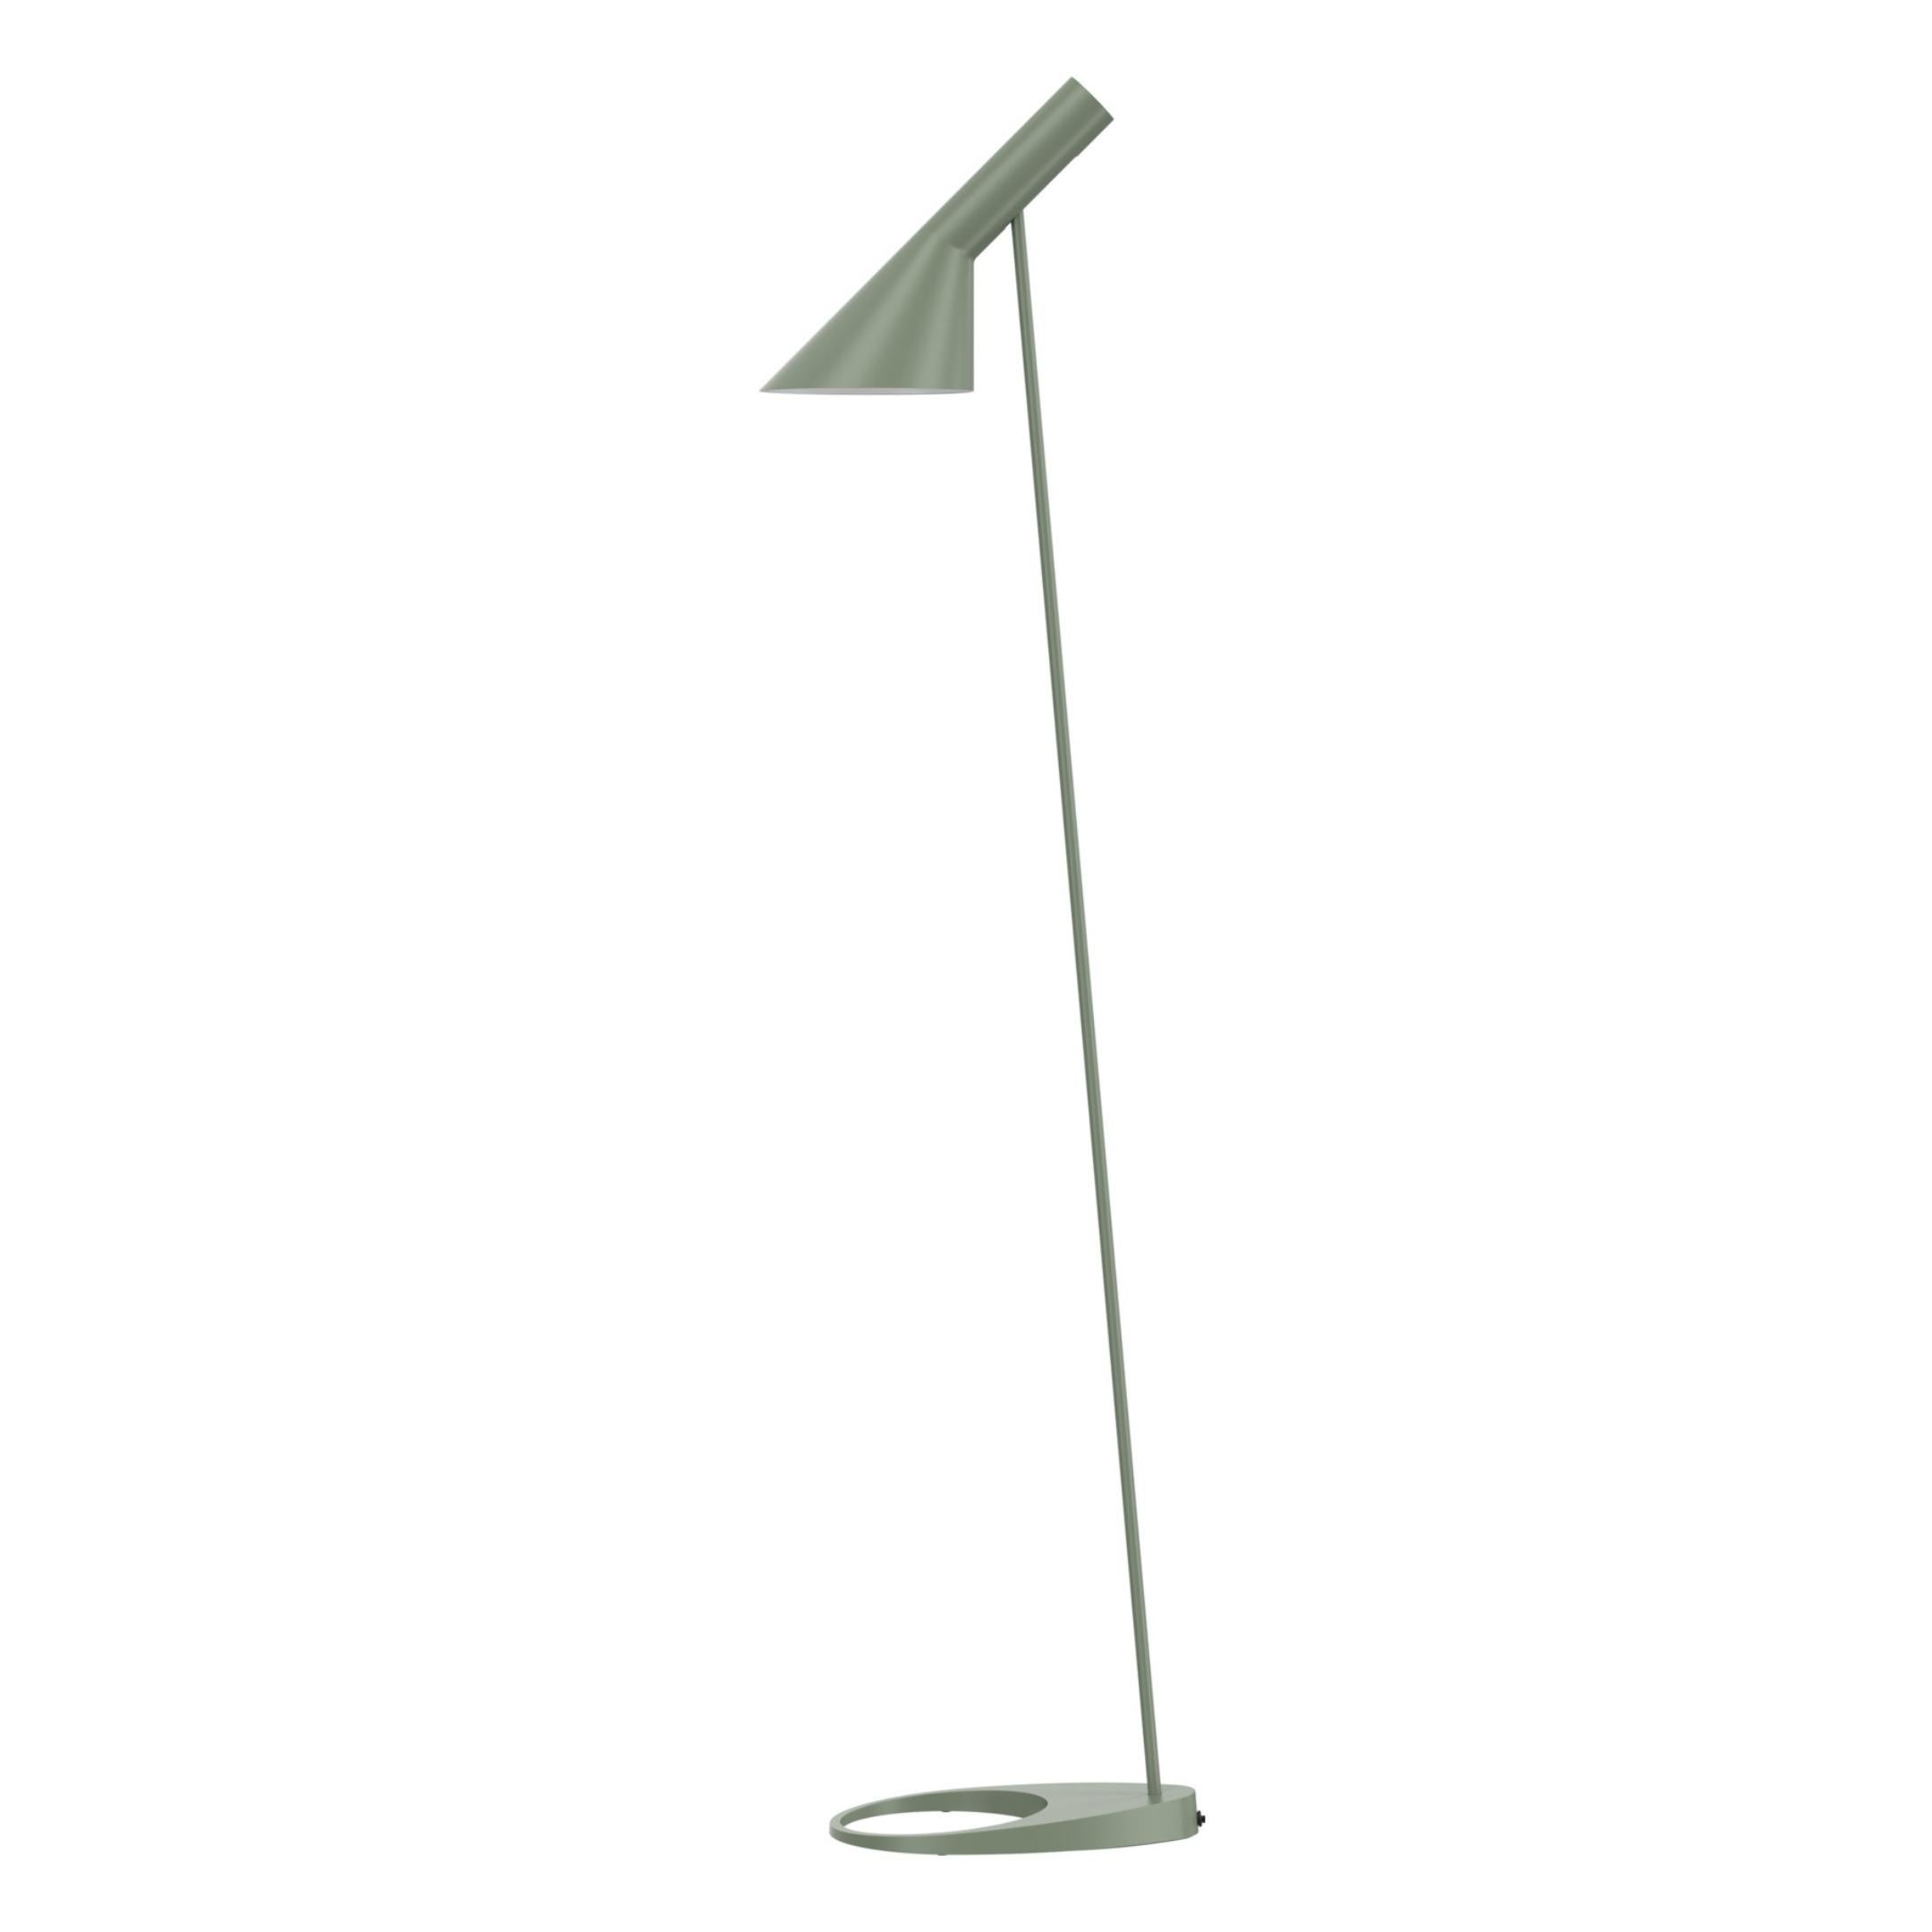 Arne Jacobsen AJ Floor Lamp in Warm Grey for Louis Poulsen For Sale 4